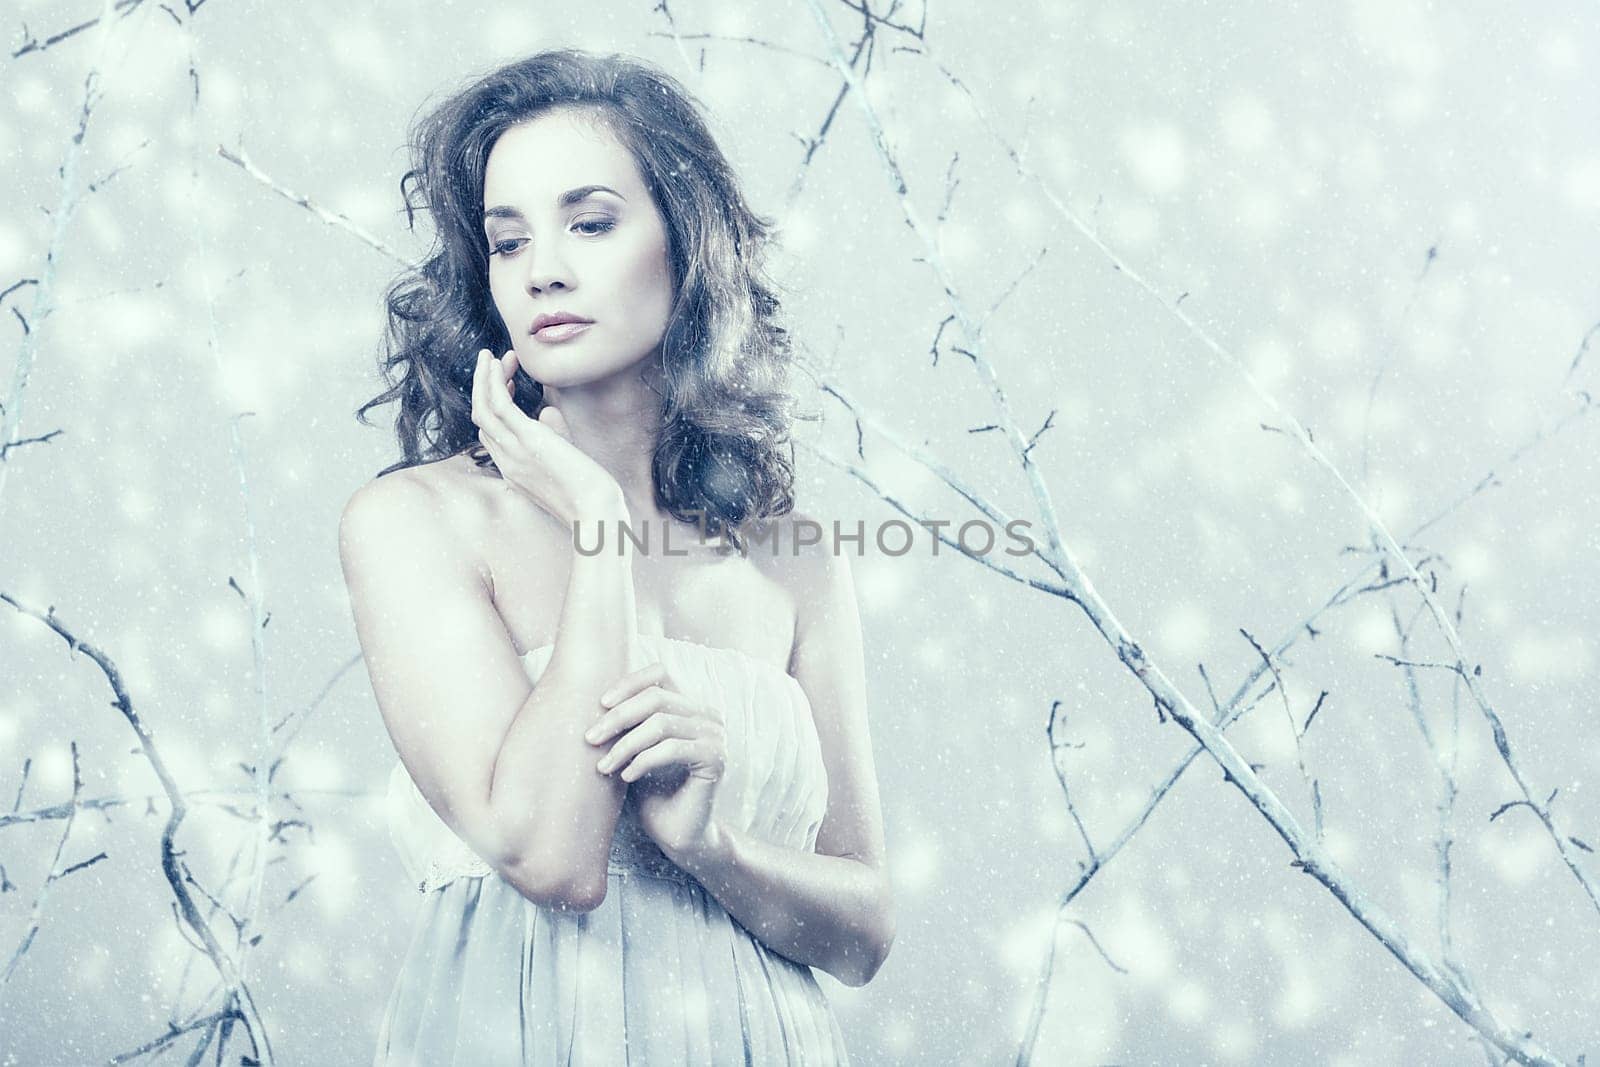 Romantic girl looking away in dress on winter fantasy set up by DCStudio